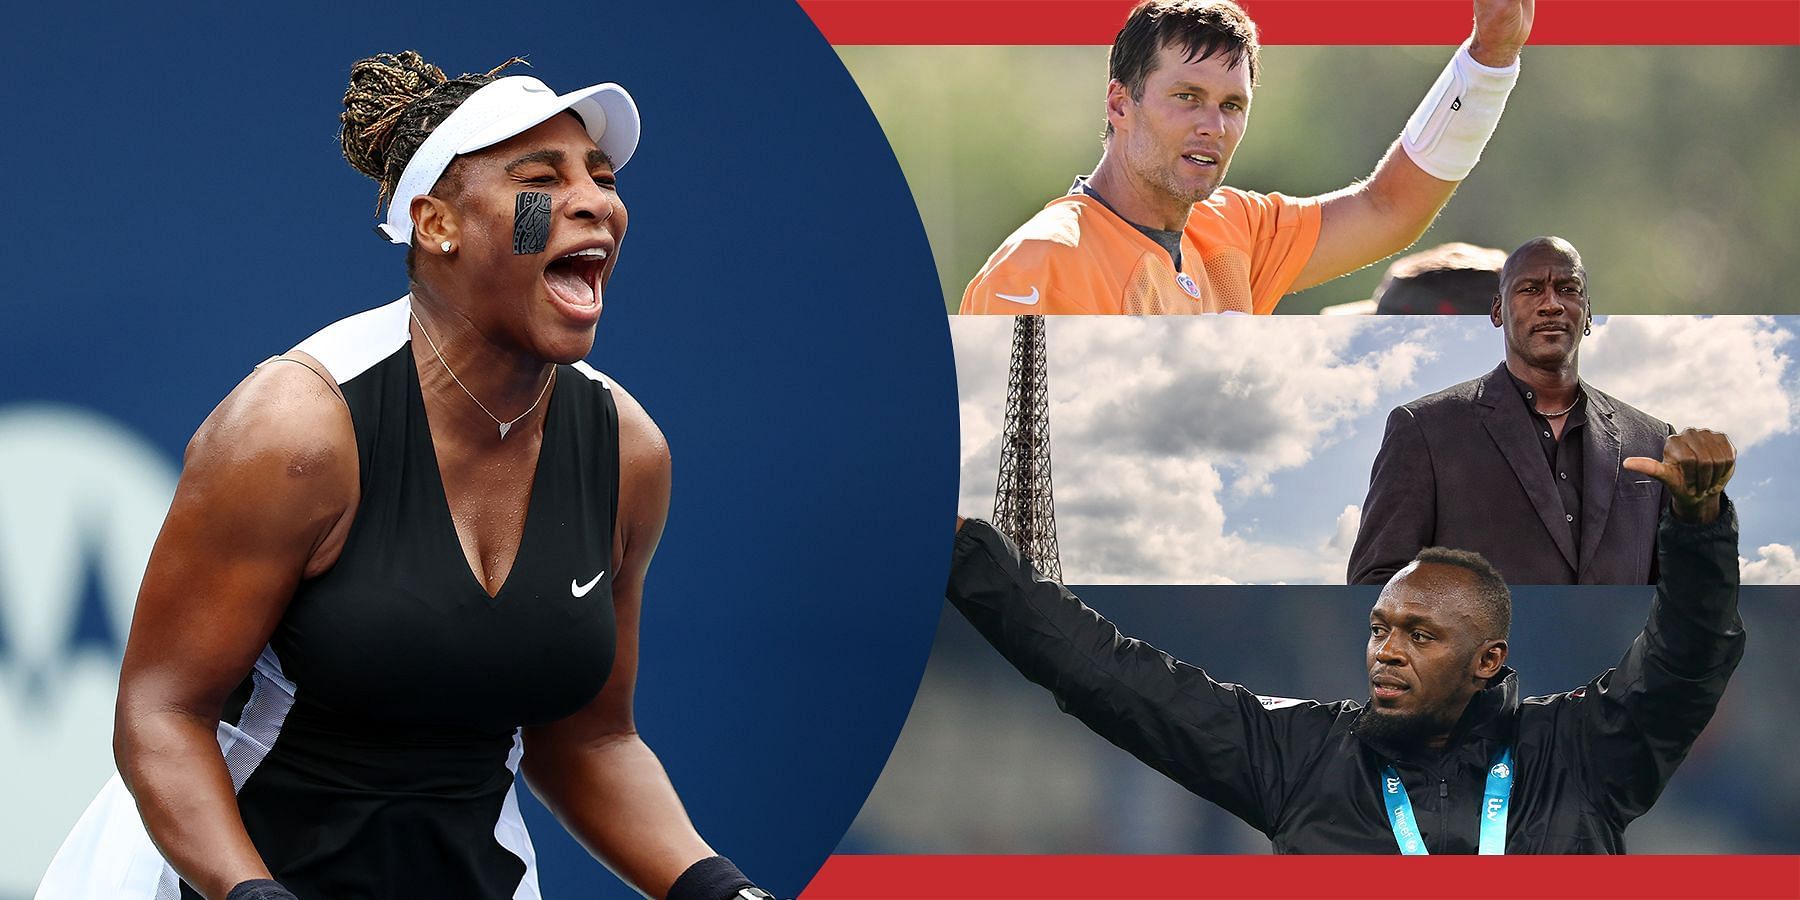 Serena Williams should be seen on the same level as Tom Brady, Usain Bolt and Michael Jordan, according to Craig Gabriel